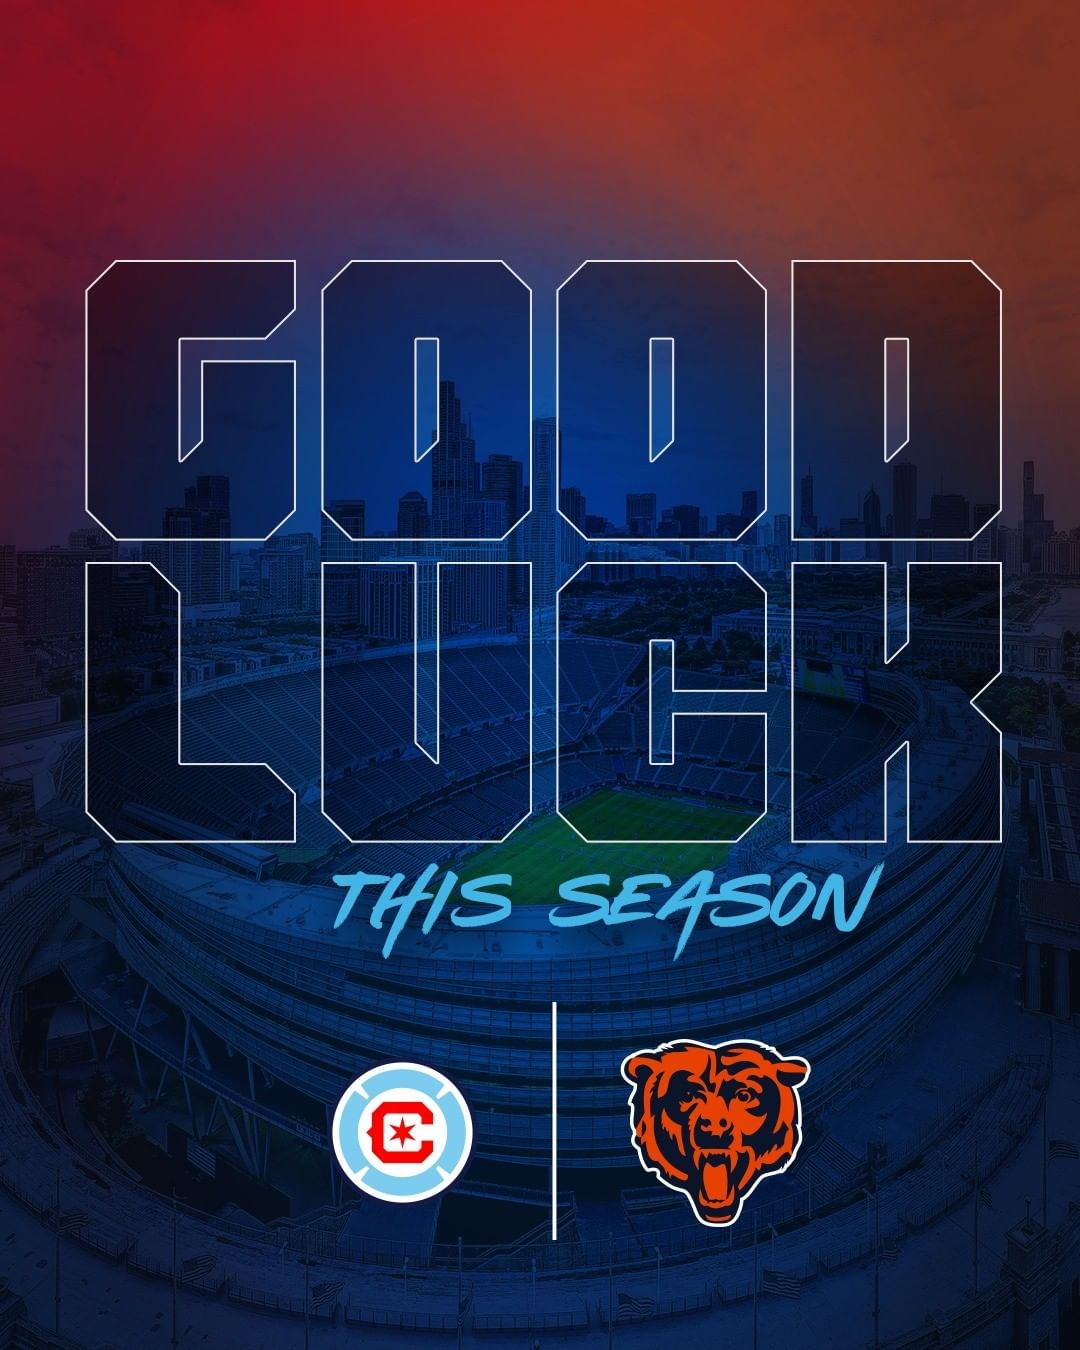 Football  fútbol Good luck this season, @chicagofire!...